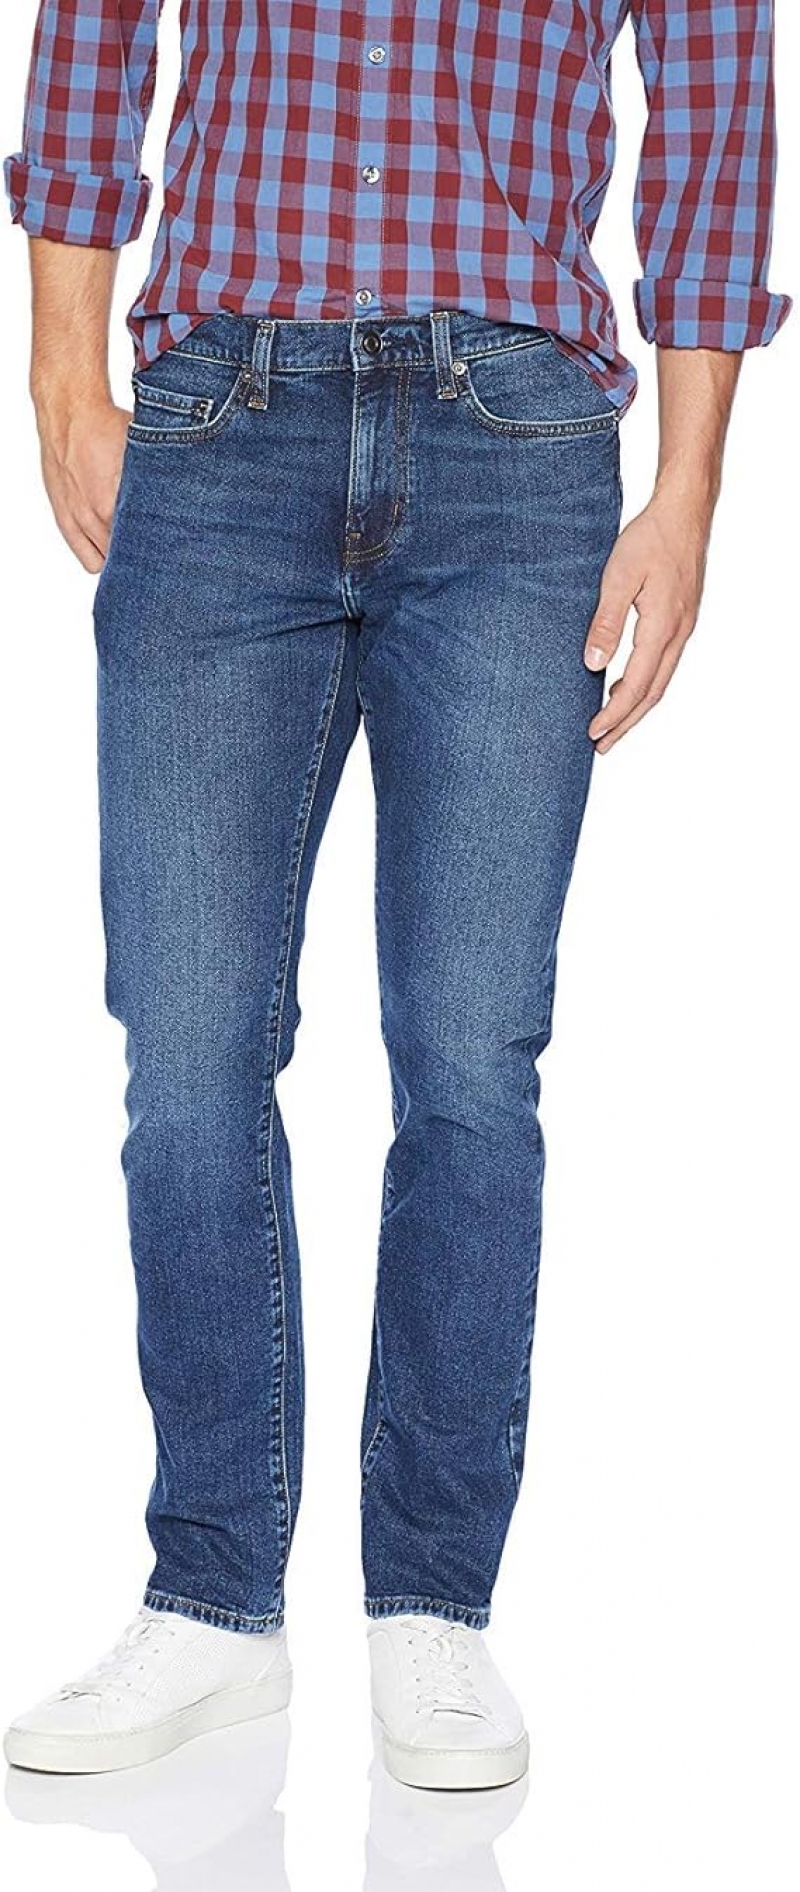 ihocon: [Amazon自家品牌] Amazon Essentials Men's Slim-Fit Jeans 男士牛仔裤